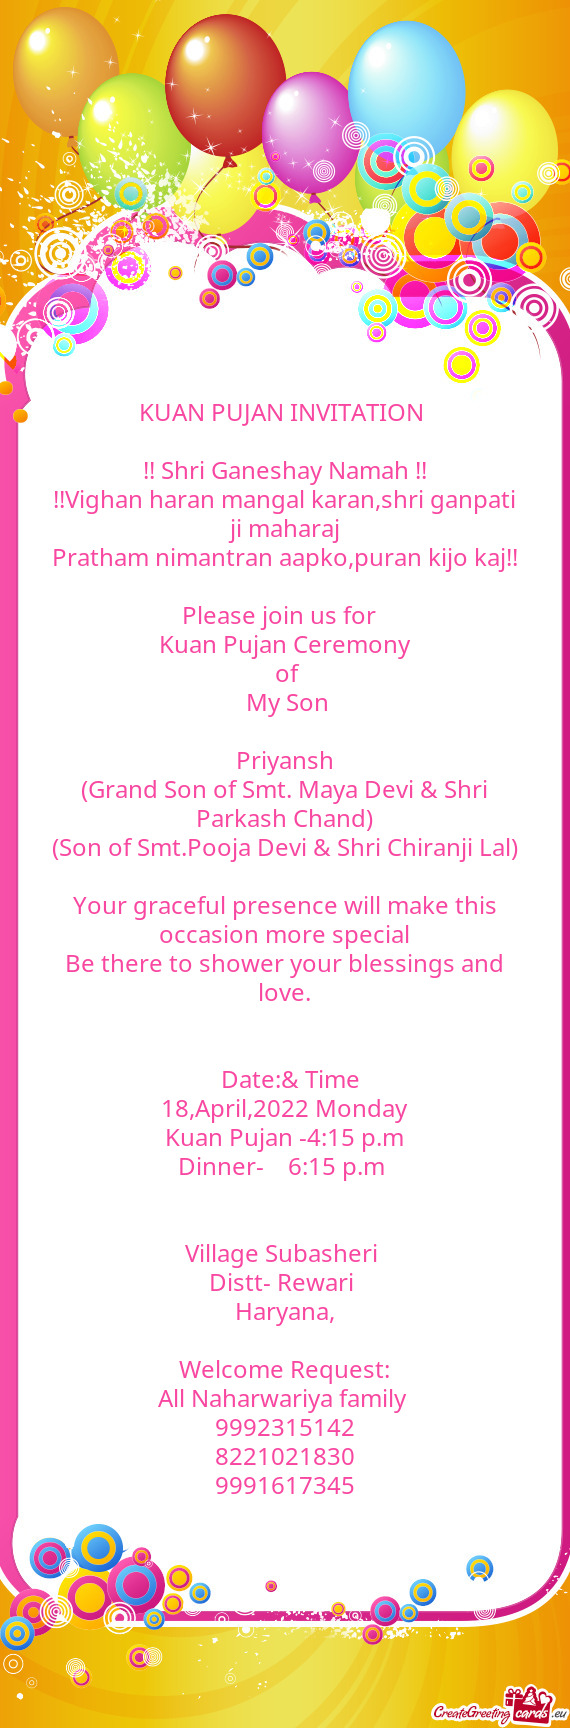 (Grand Son of Smt. Maya Devi & Shri Parkash Chand)